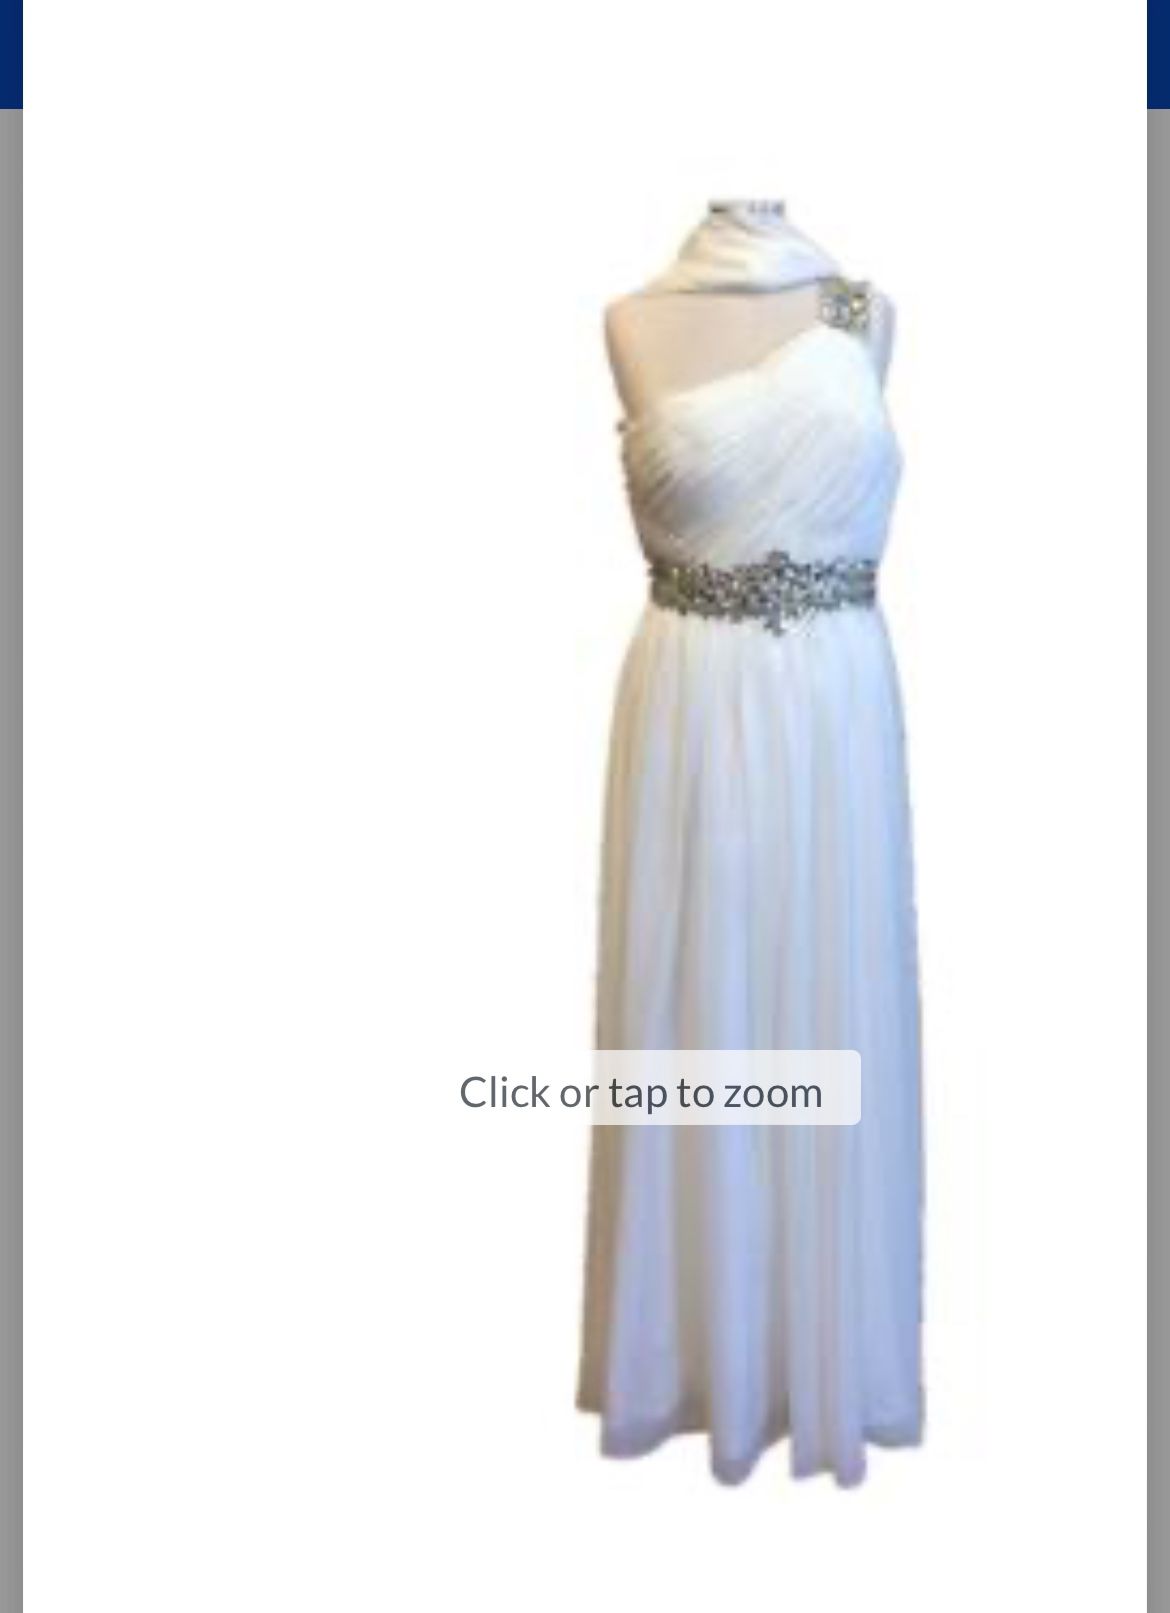 Women's Sexy Dress Ivory Chiffon One Shoulder Sheath Slim Full-Length Homecoming Formal Prom Party Wedding Dress